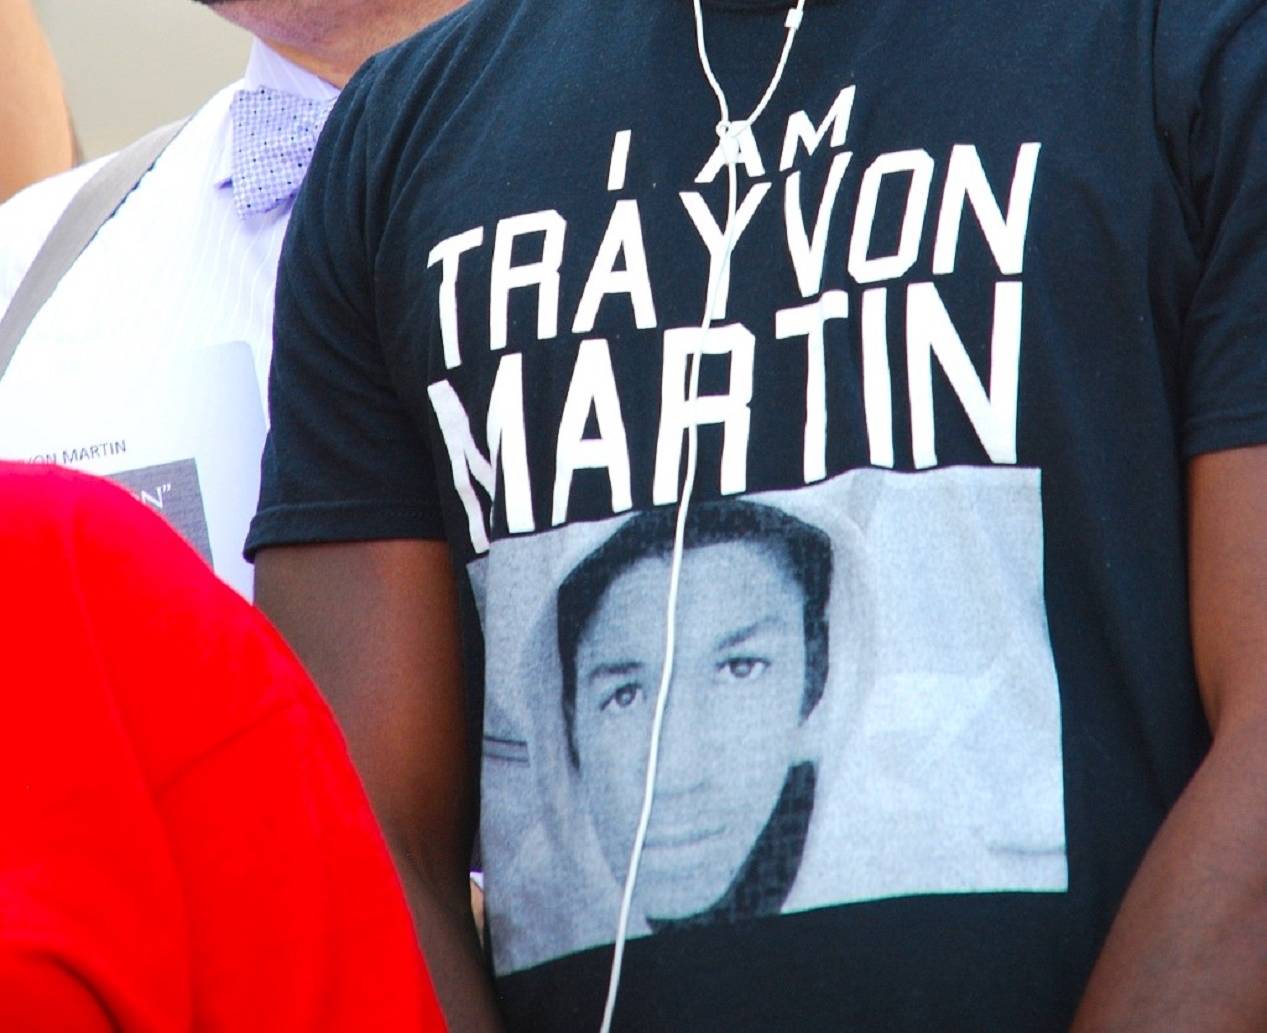 trayvon martin protest resize - Vintage